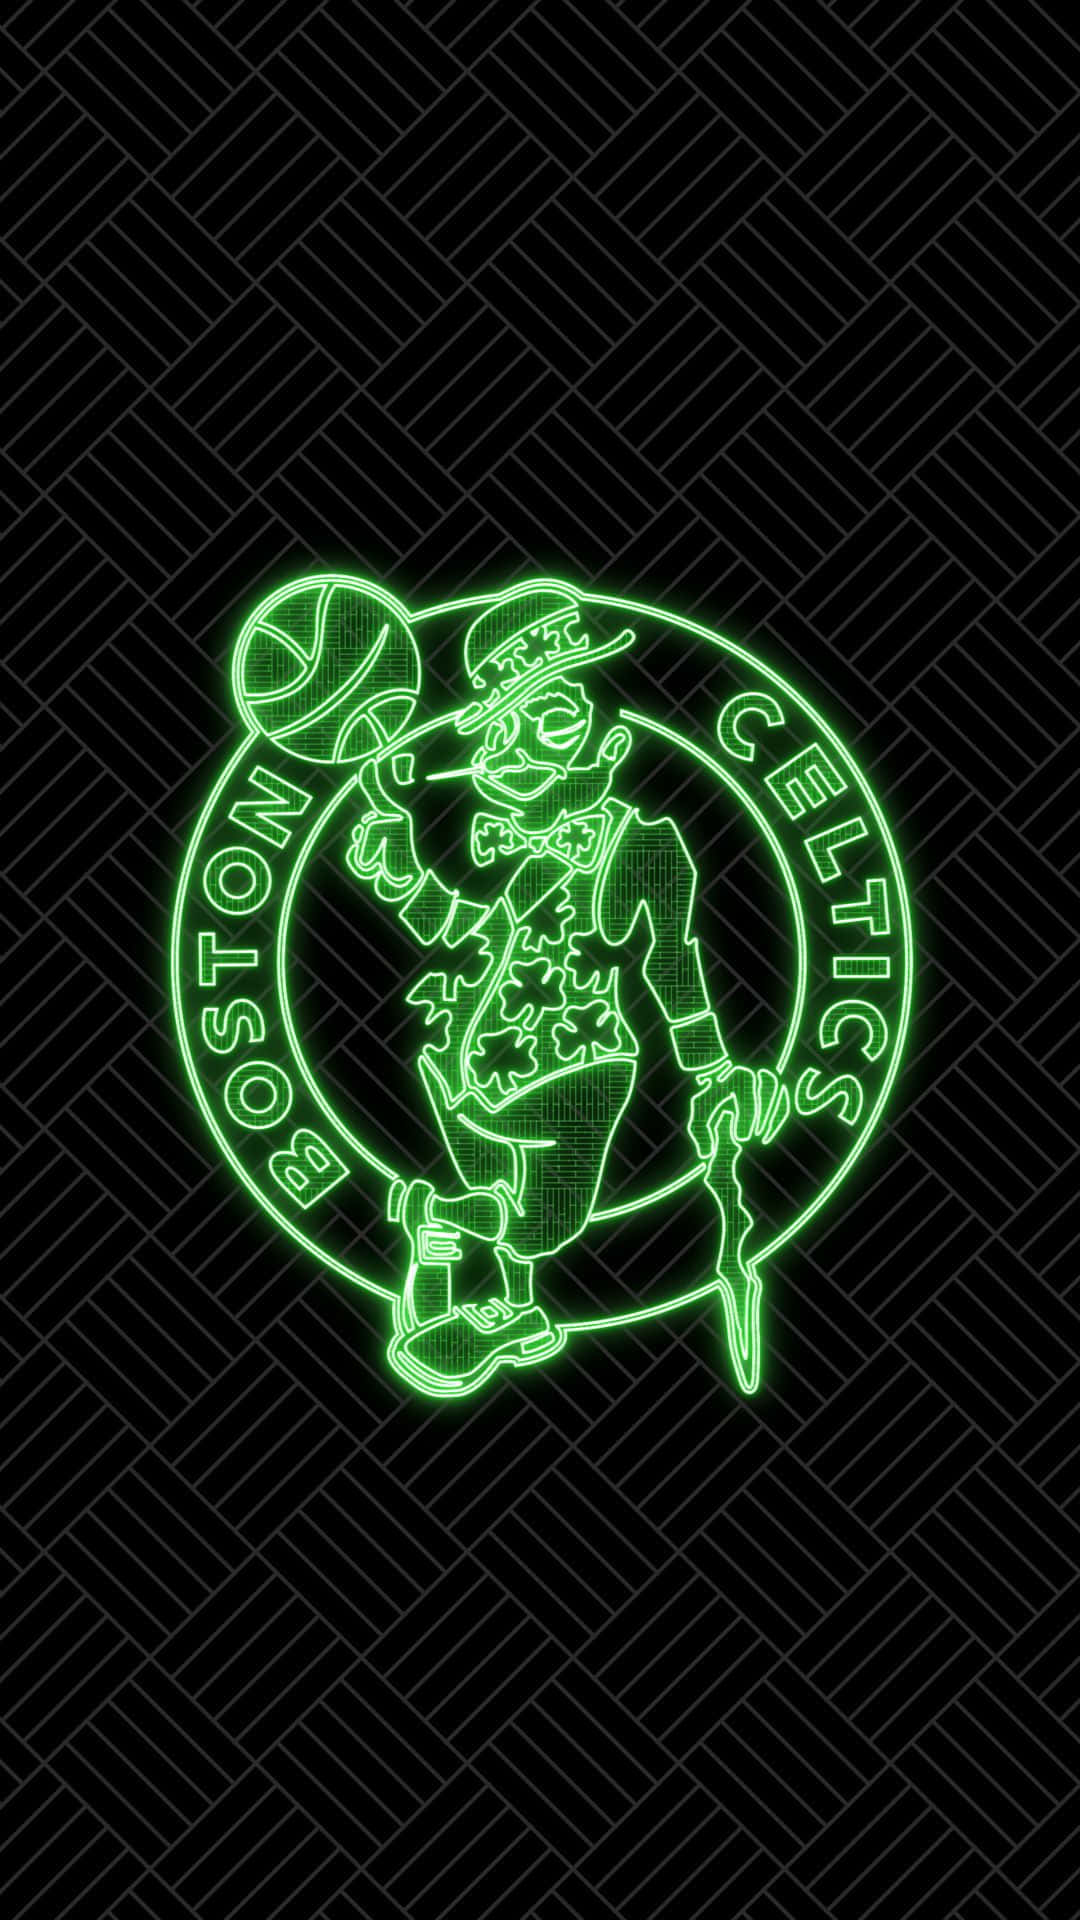 "Boston Celtics Logo Illuminated at Night"